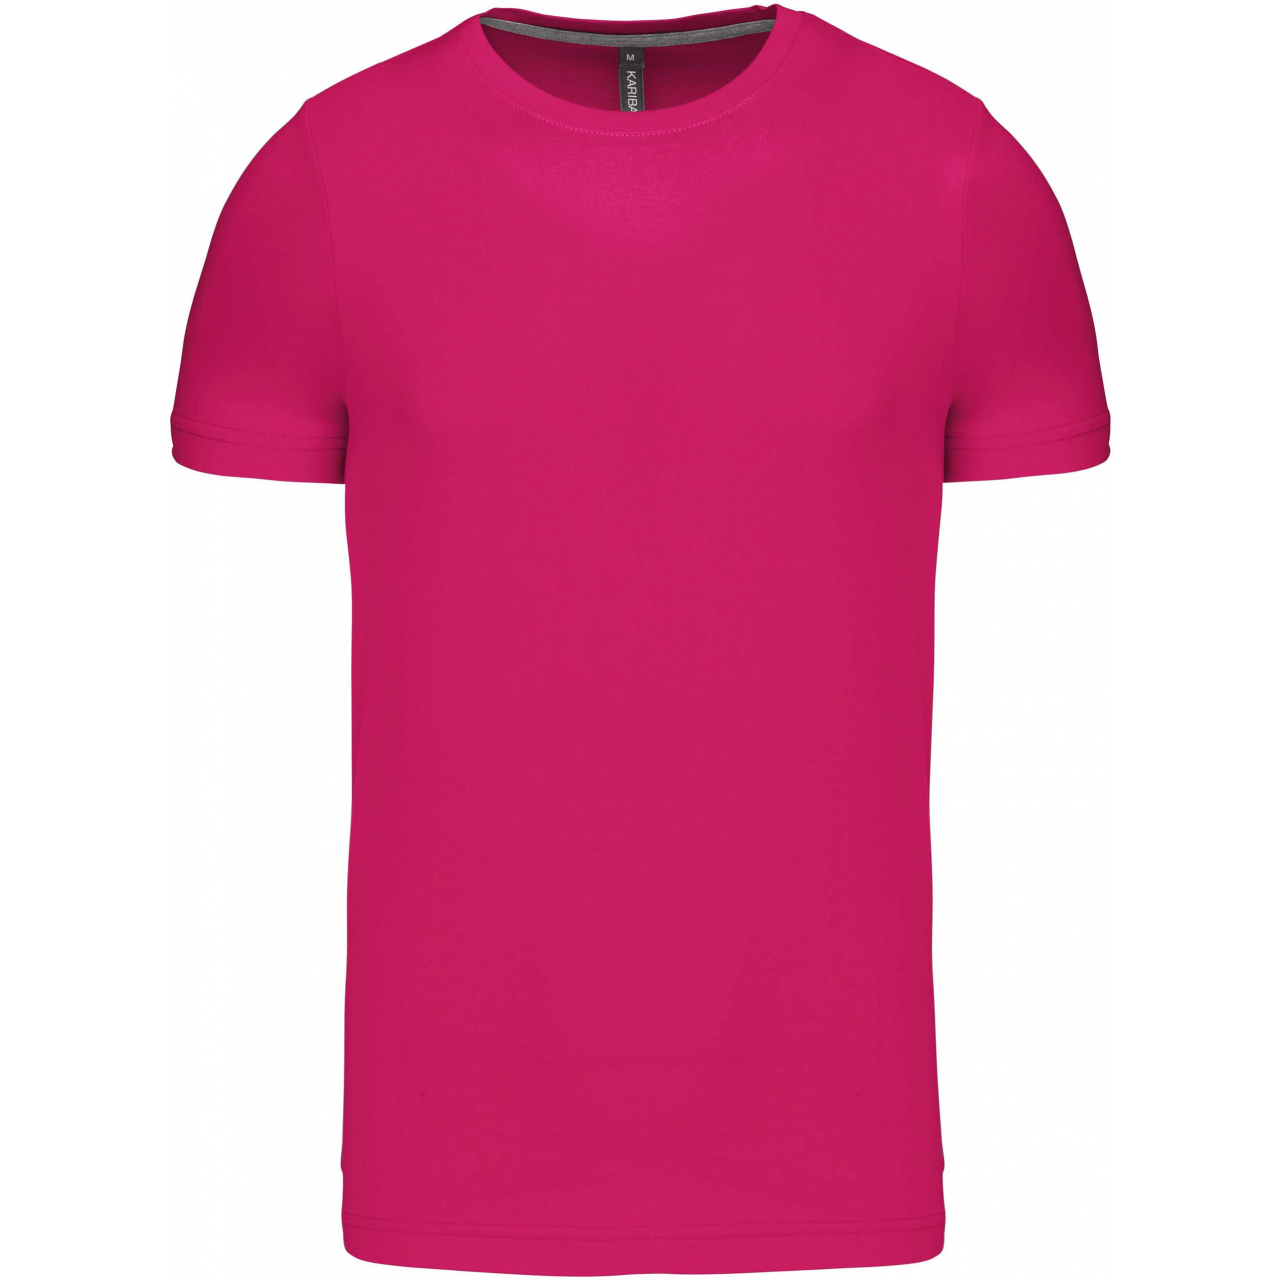 Pánské tričko Kariban krátký rukáv - růžové, XXL